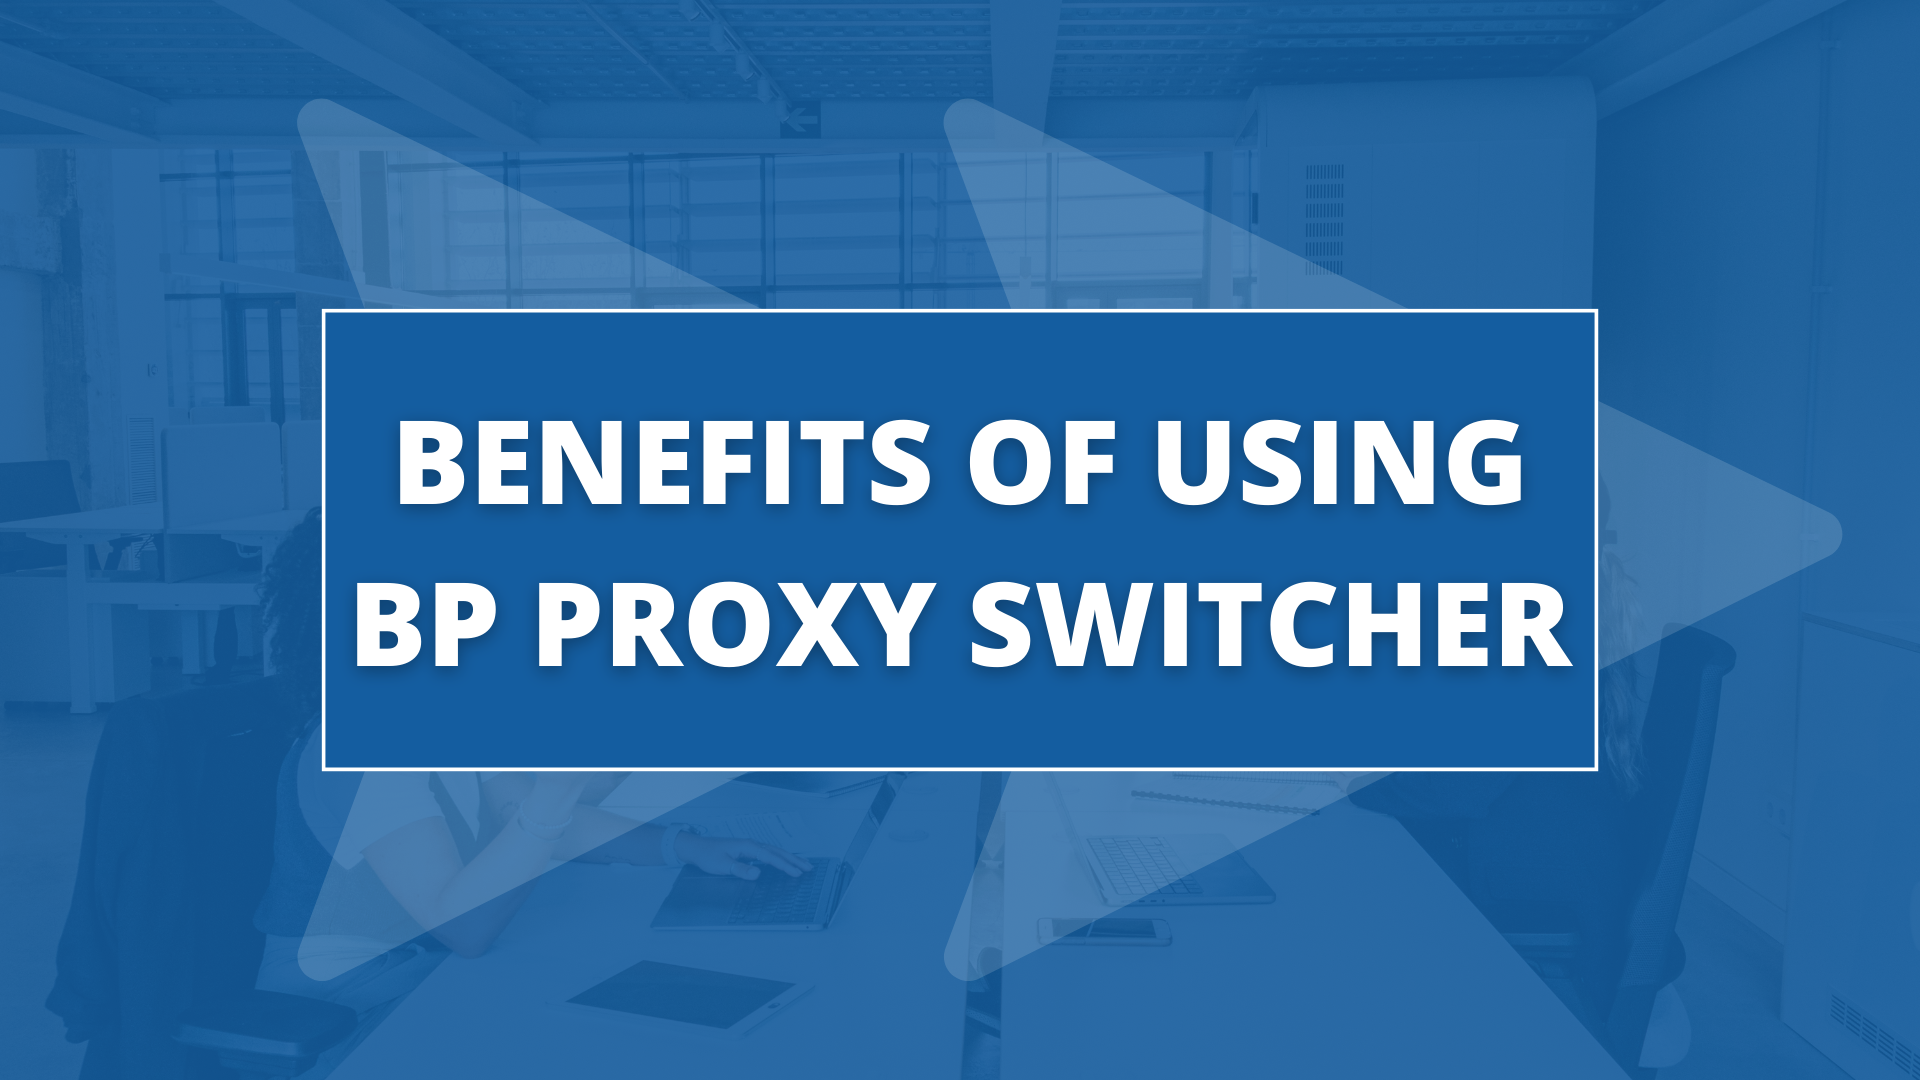 Benefits of using BP Proxy Switcher